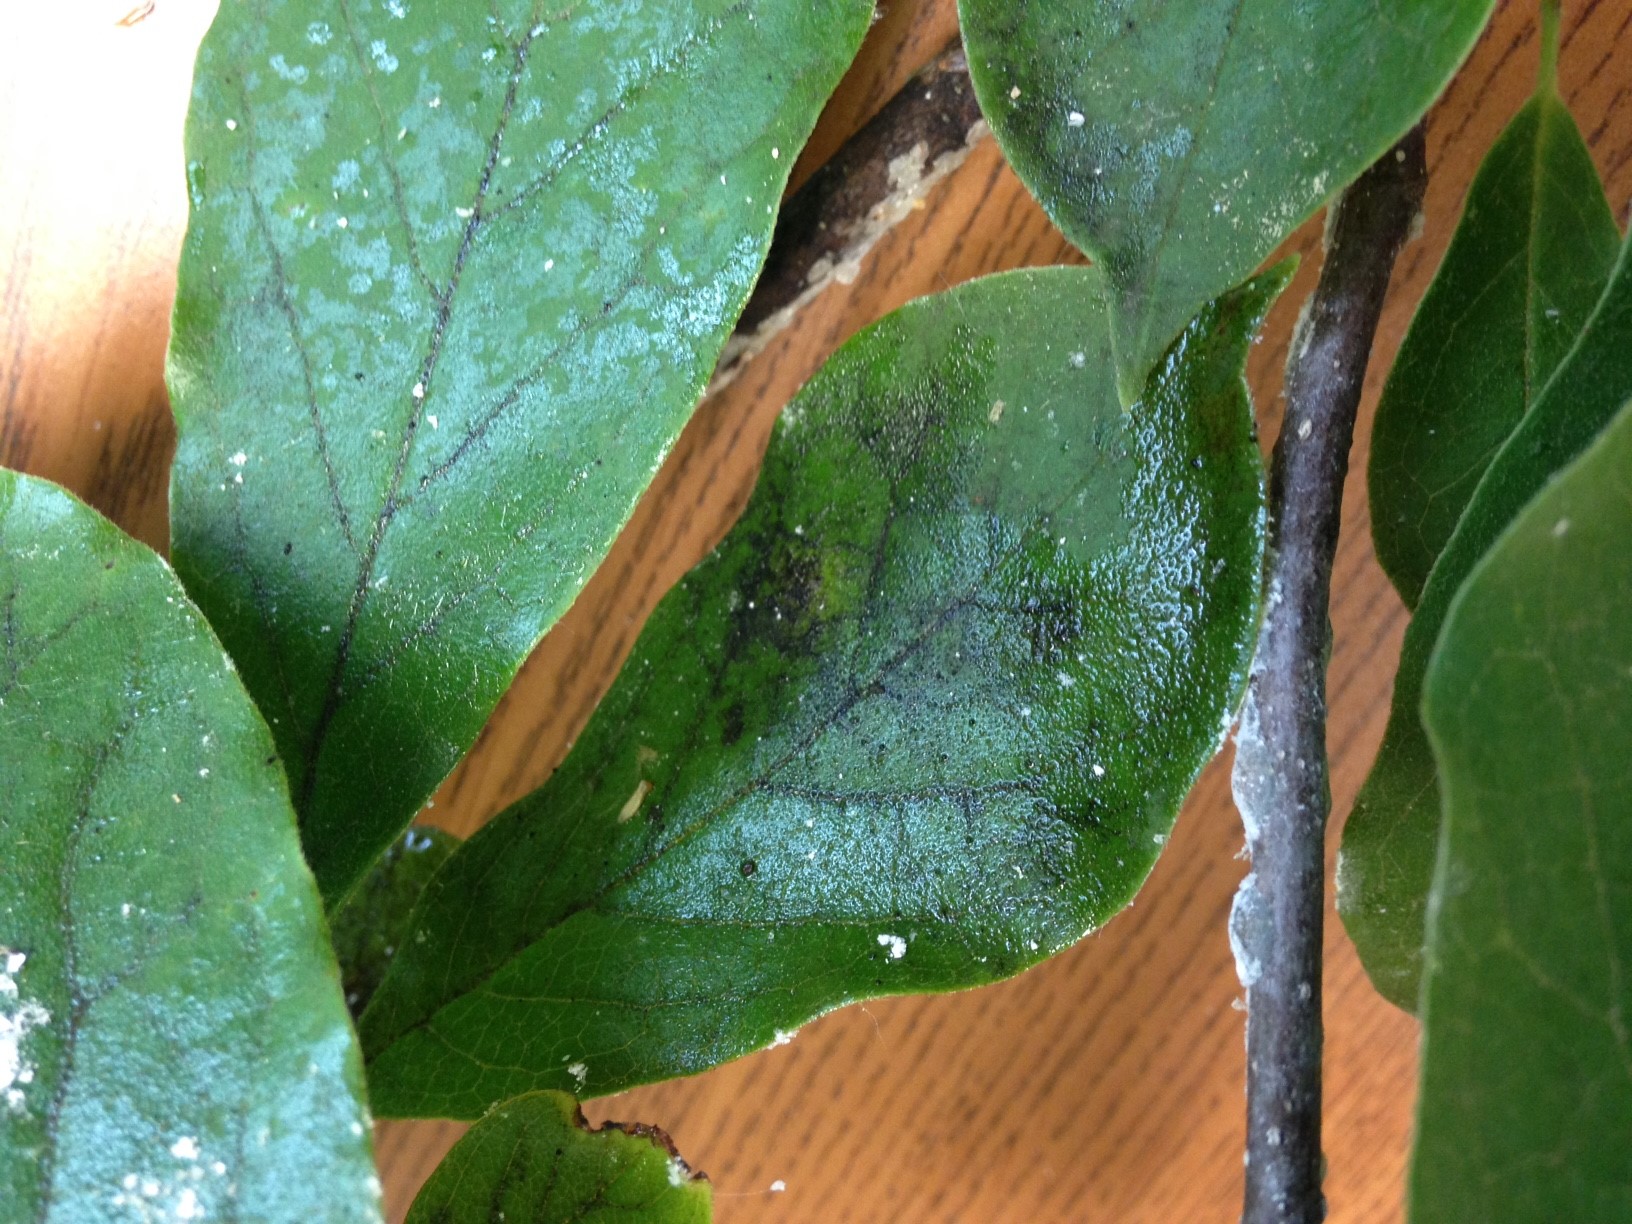 Sooty mold on magnolia leaves